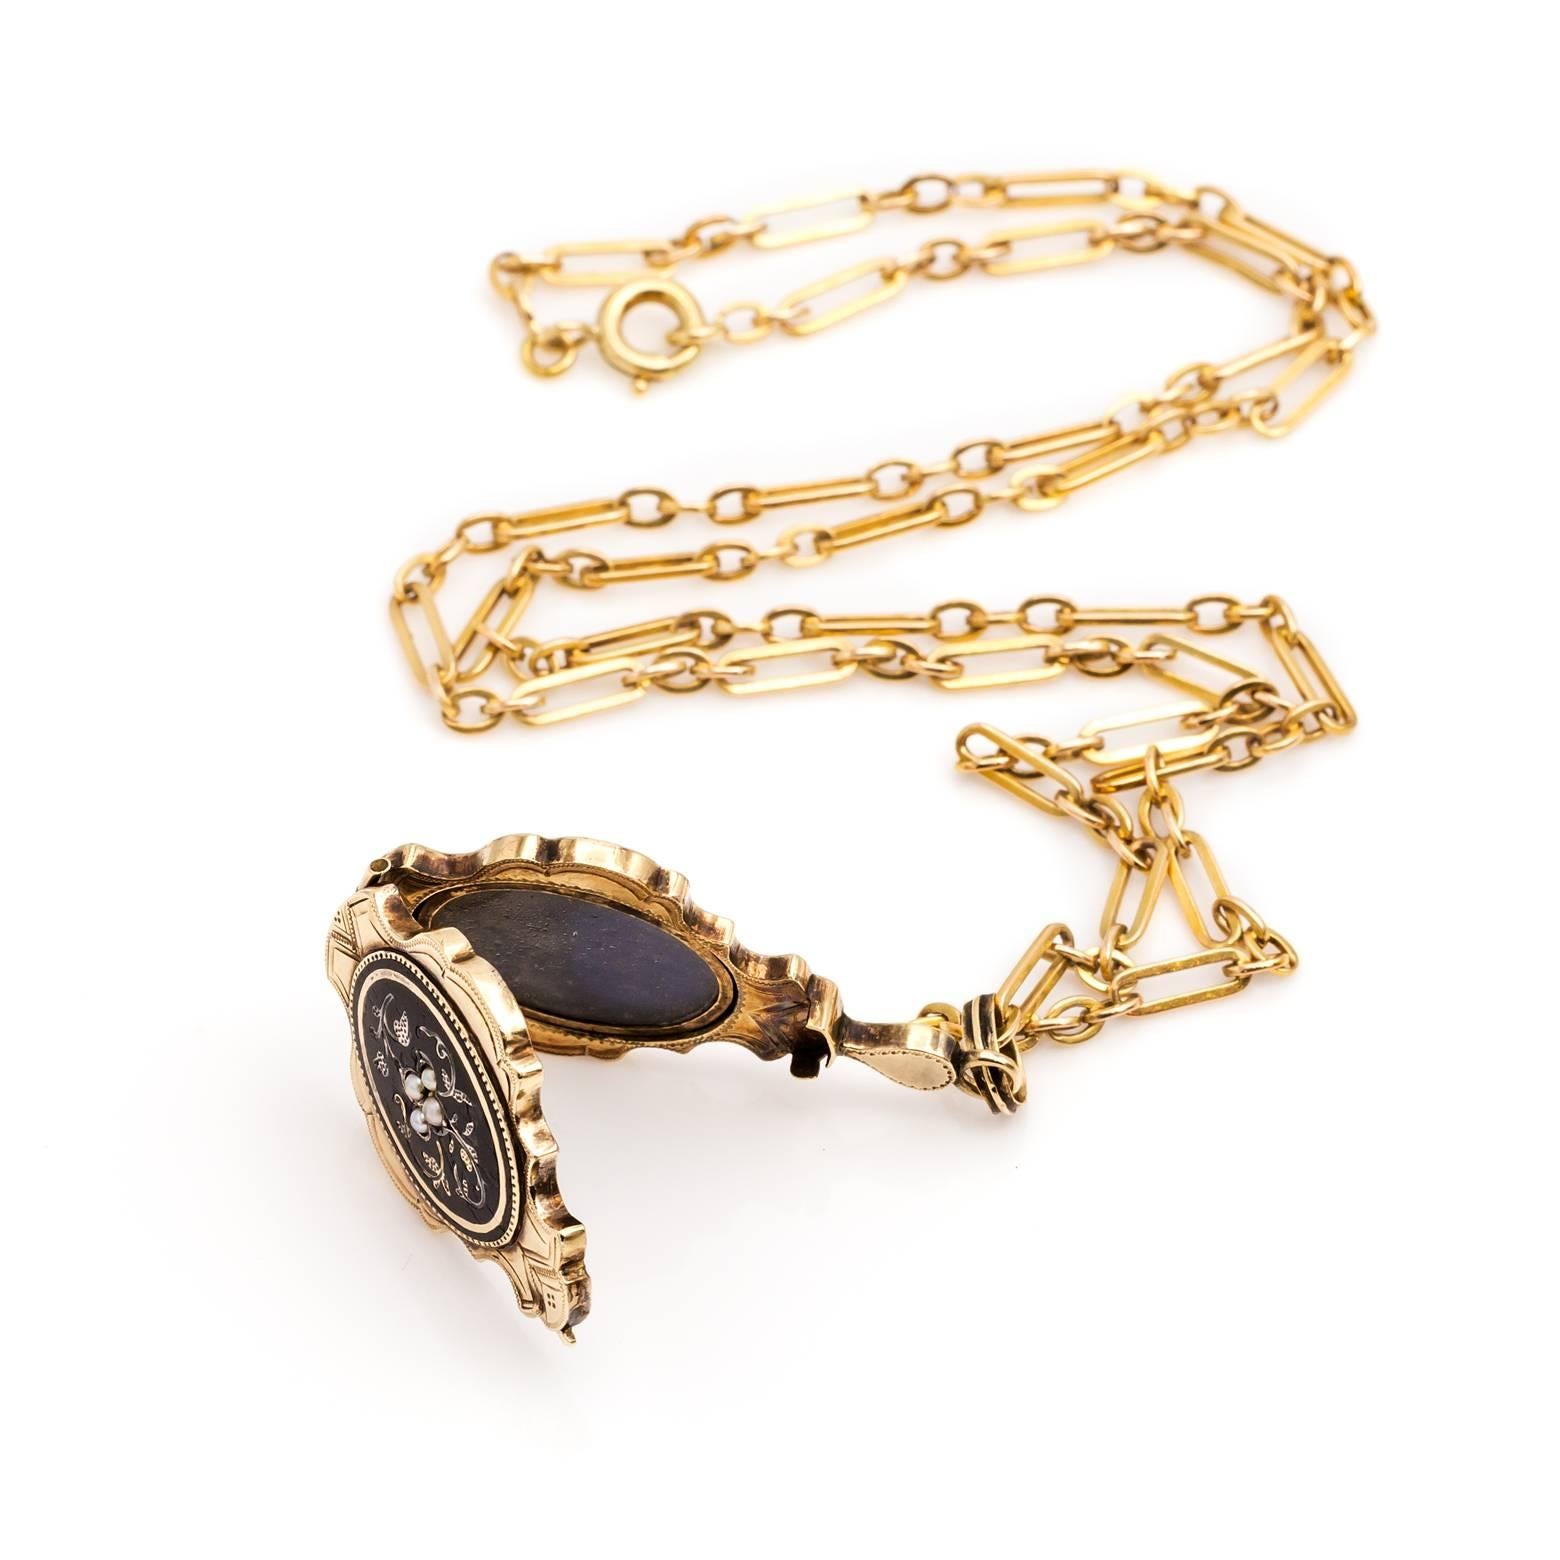 Antique Black Enamel, Pearl and Gold Locket in a Floral Design For Sale 3